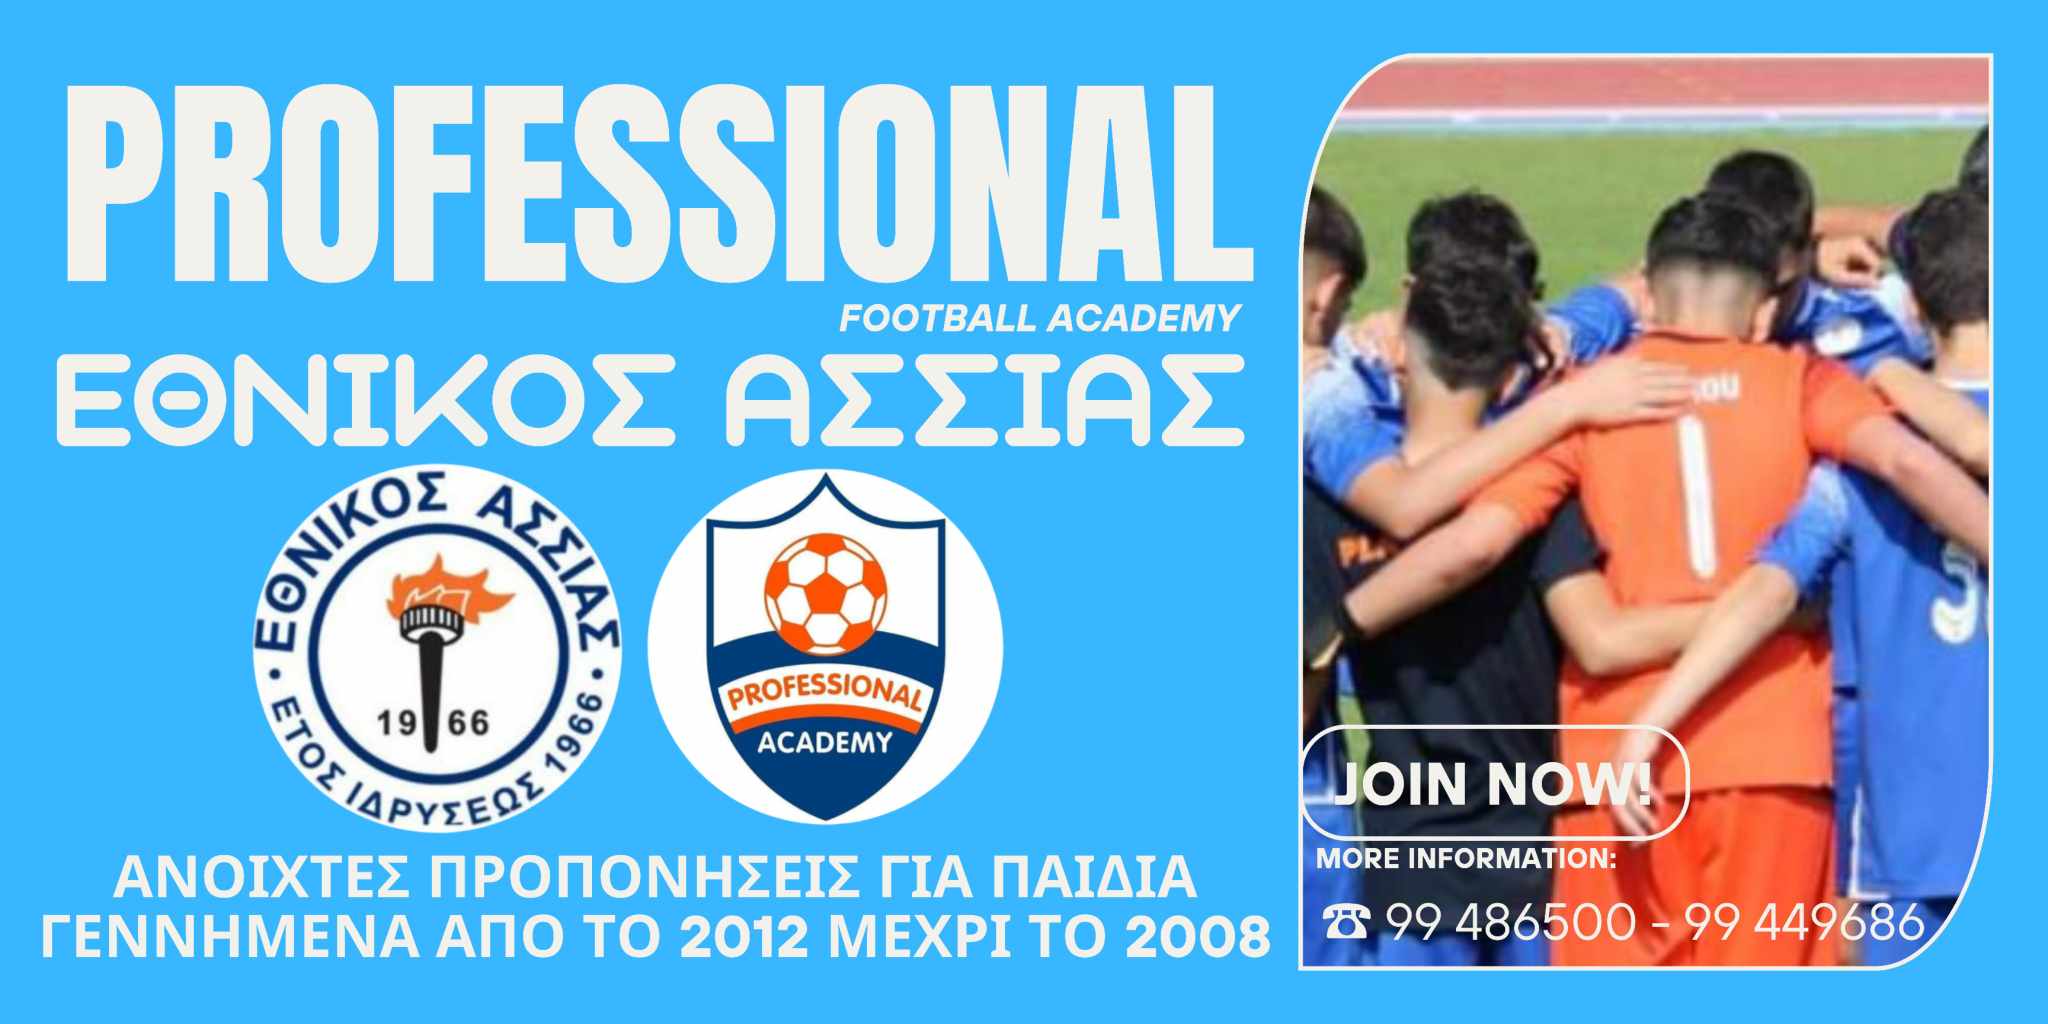 Professional Football Academy Εθνικός Άσσιας: Ανοιχτές προπονήσεις για παιδιά γεννημένα από το 2012 μέχρι και το 2008